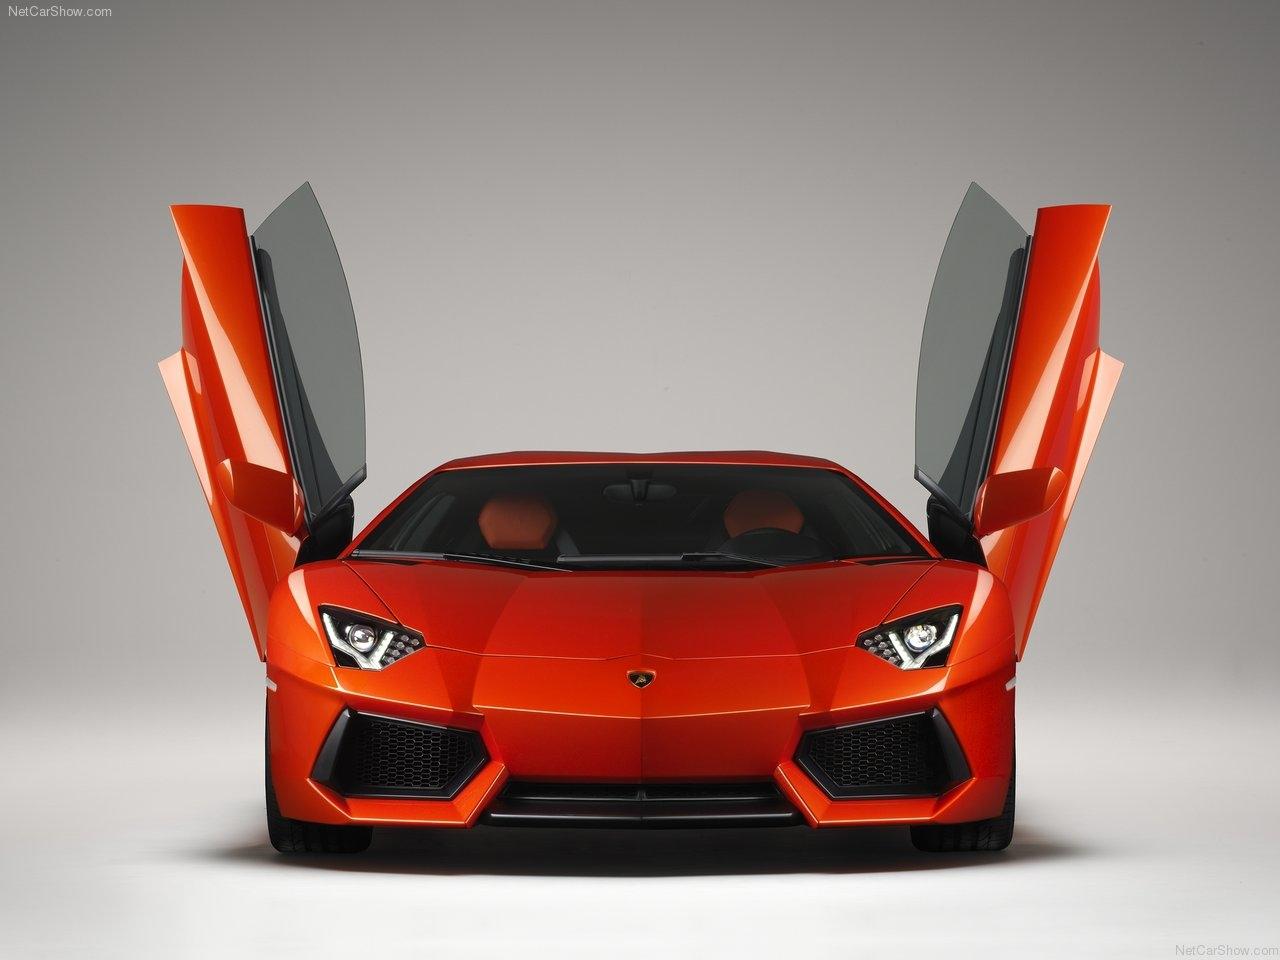 Lamborghini at 1024 x 1024 iPad size wallpapers HD quality